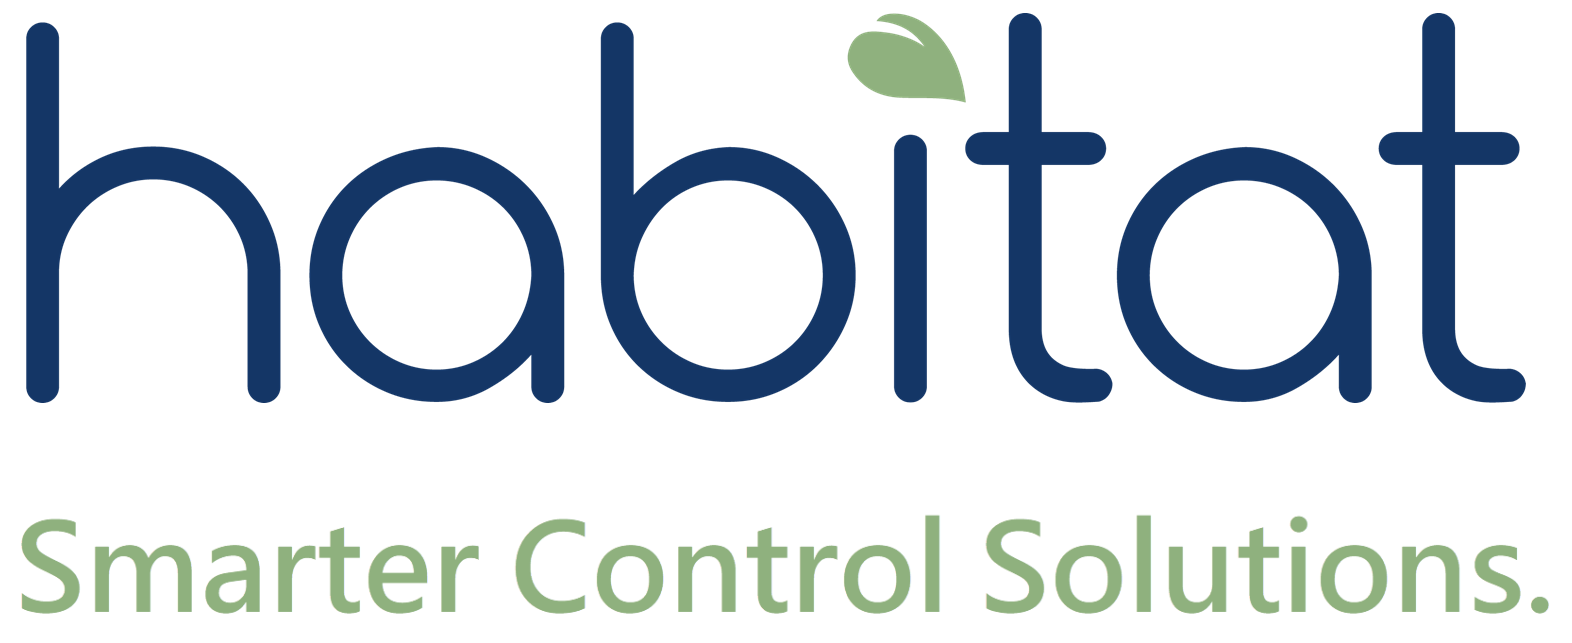 Habitat’s "Simple Smart" unique wireless Wi-Fi capable smart thermostat